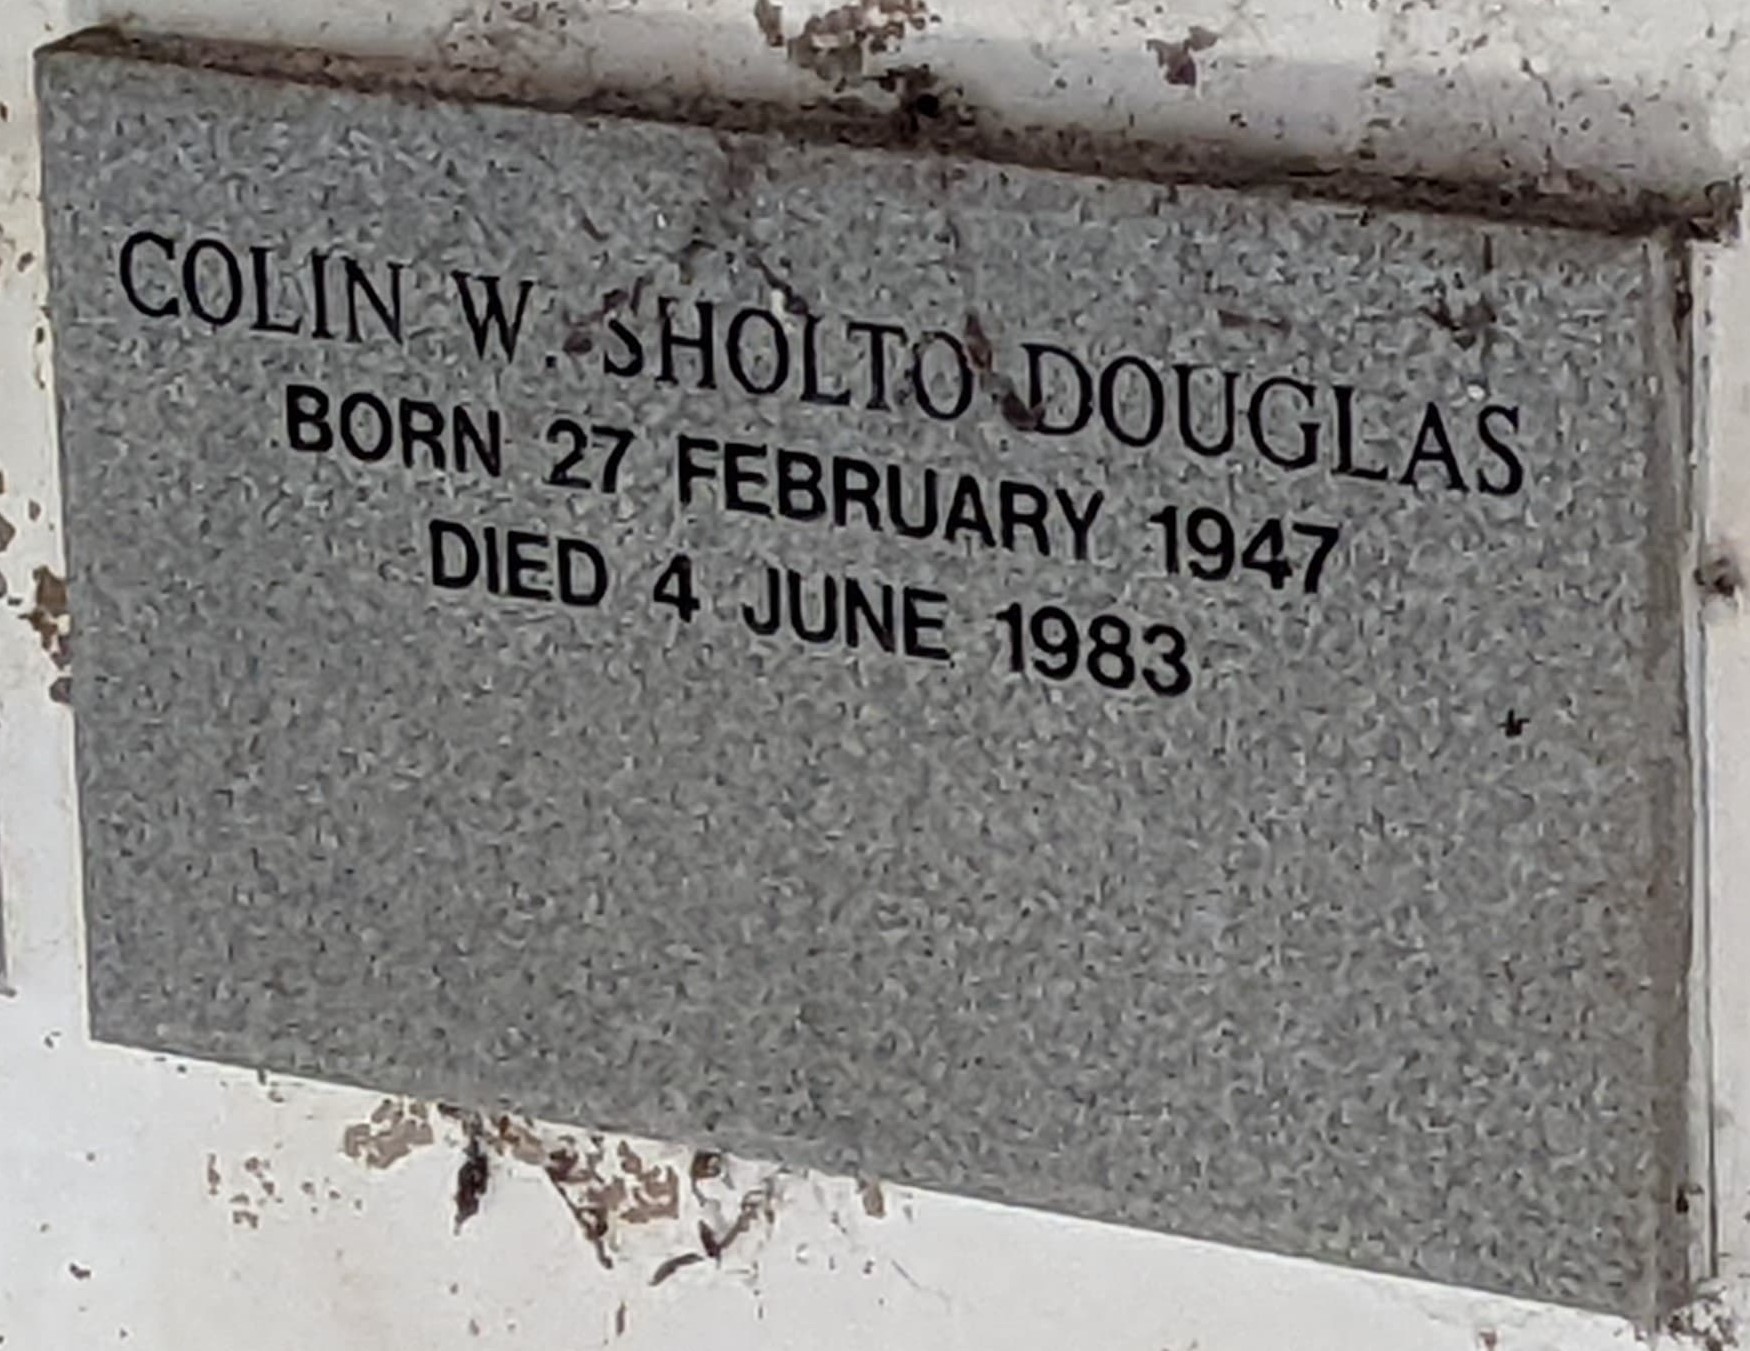 Memorial to colin, 1947-1983